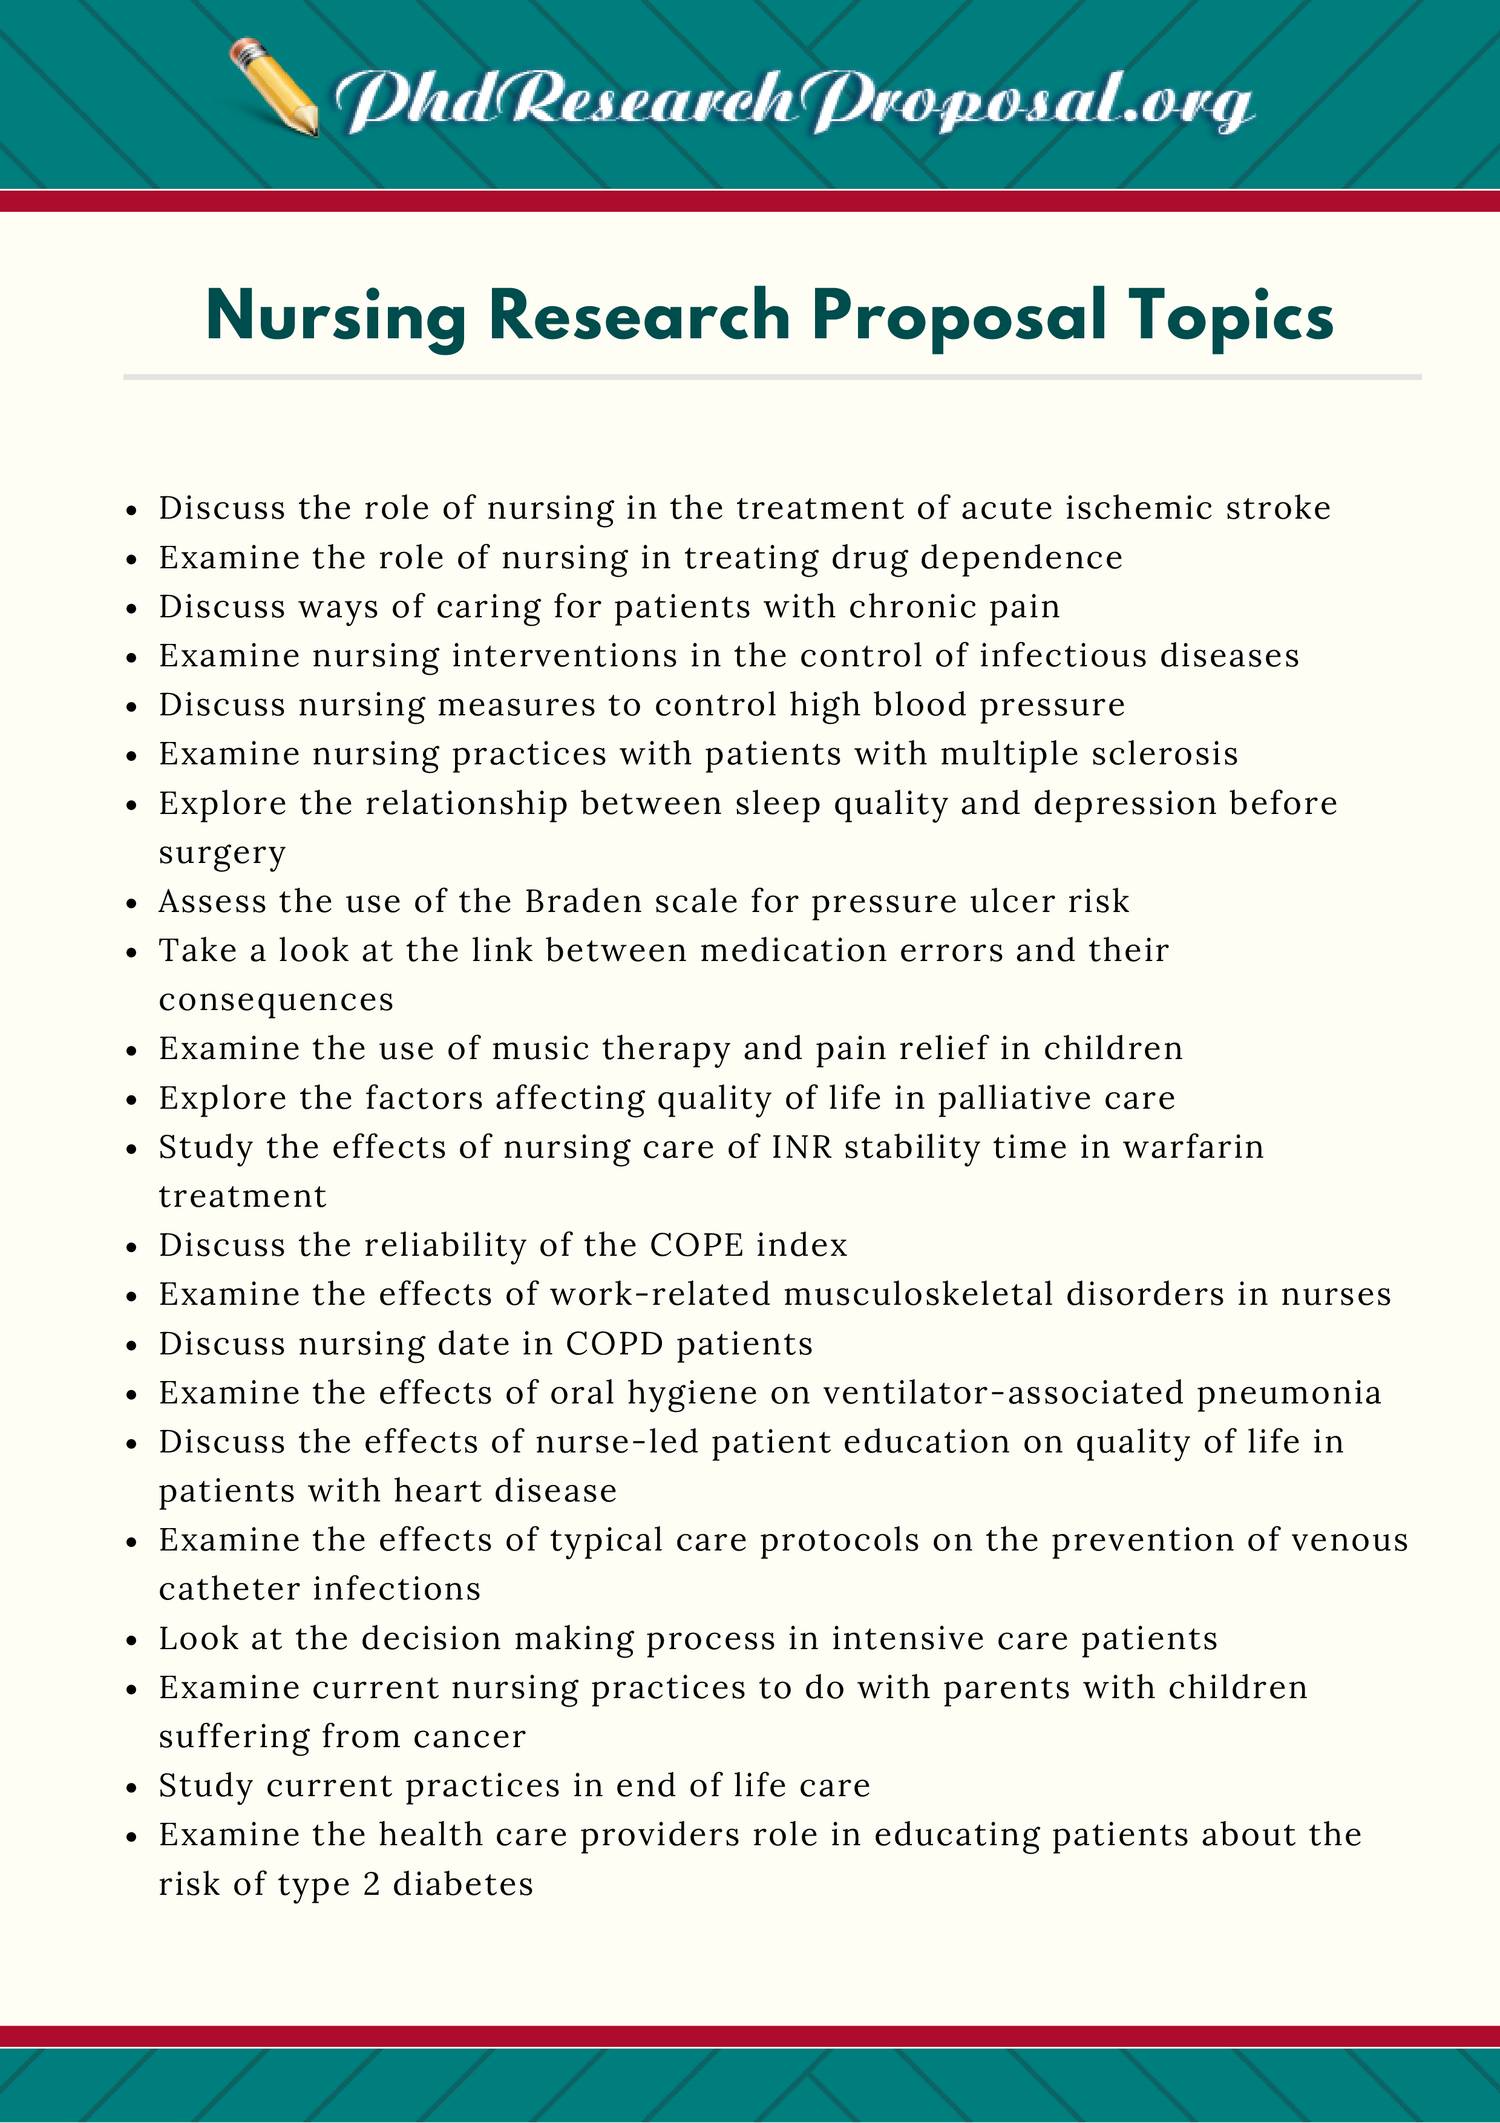 speech topics for nursing students